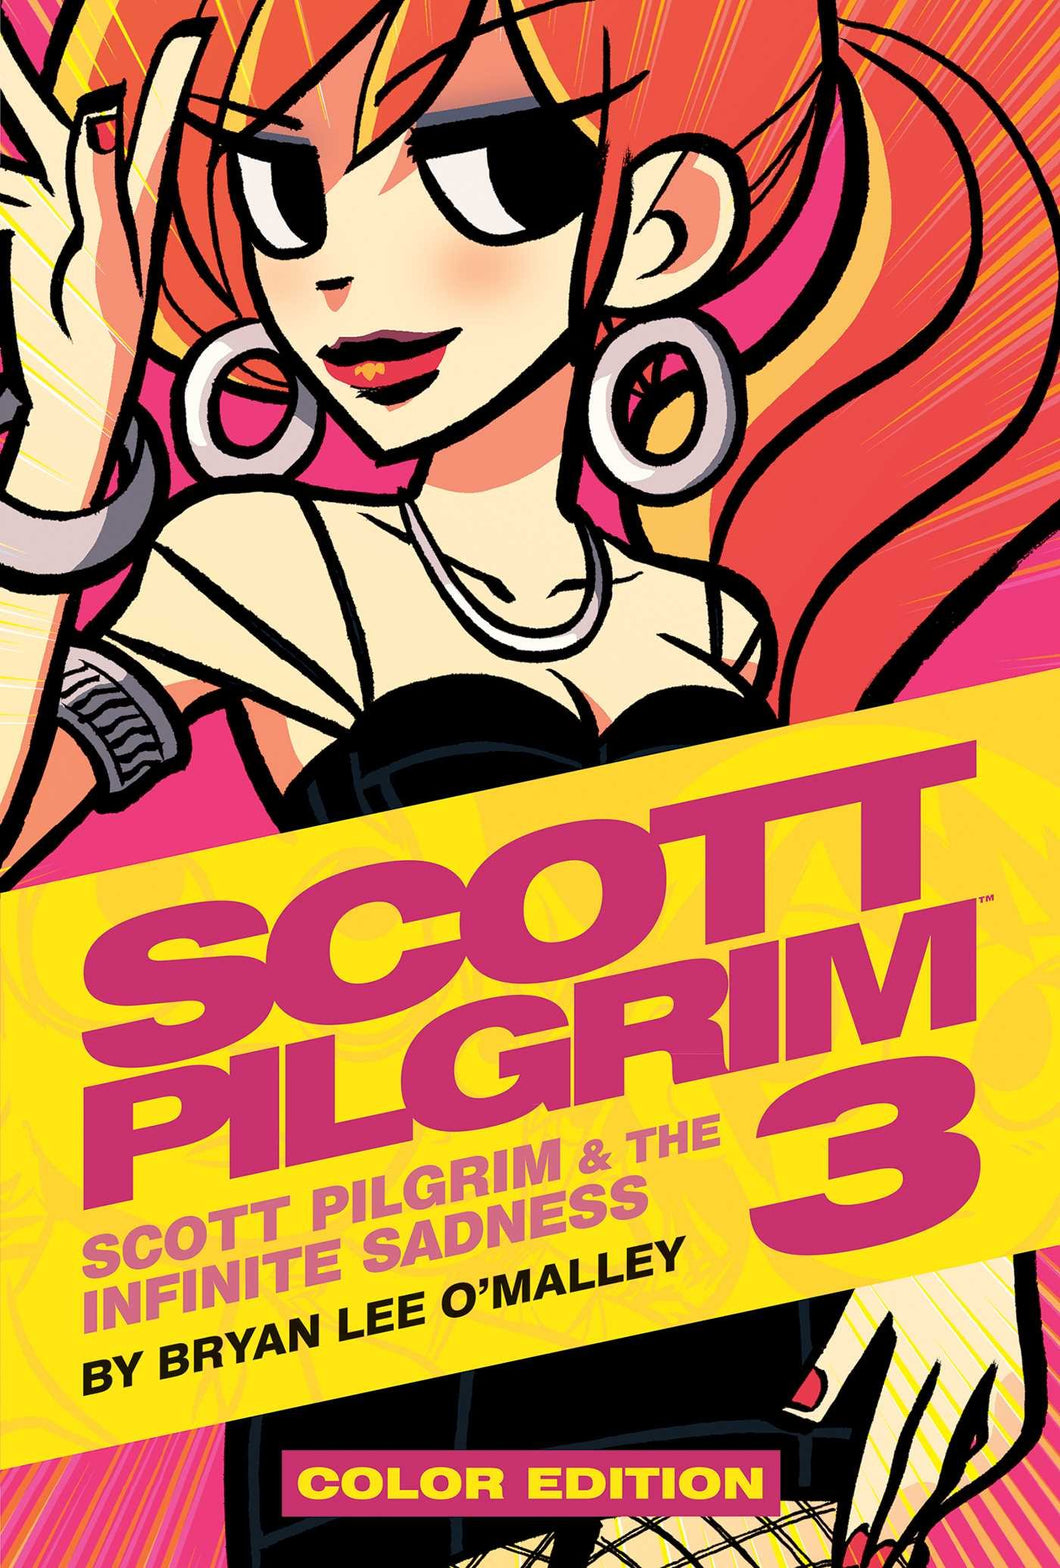 Scott Pilgrim Volume 3: Scott Pilgrim & The Infinite Sadness by Bryan Lee O'Malley